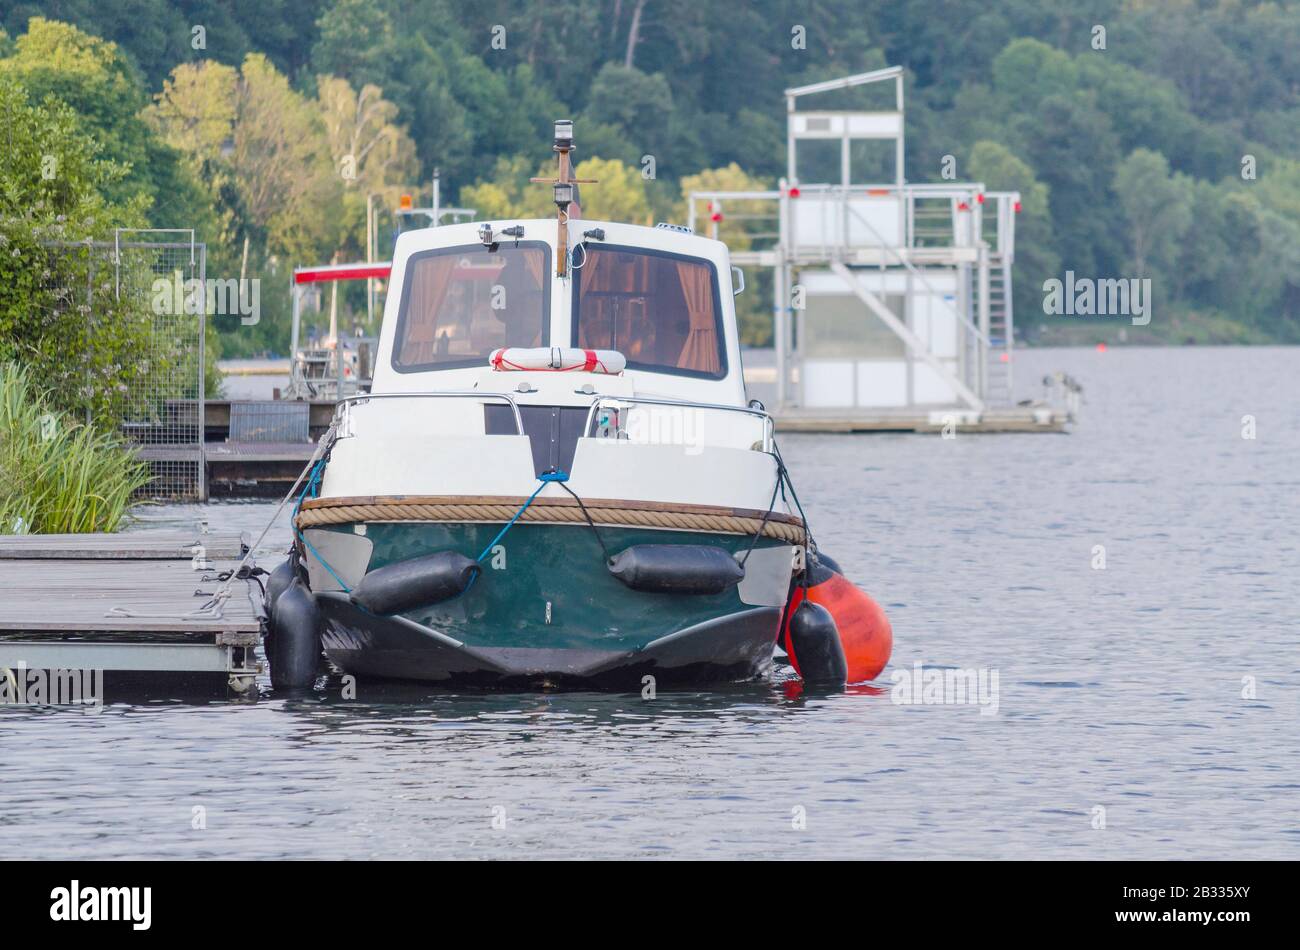 Essen, Germania - Juni 21, 2014: Licenza gratuita barca houseboat la flotta verde ormeggiata al Baldeneysee di Essen. La Green Fleet ha affittato vari Foto Stock